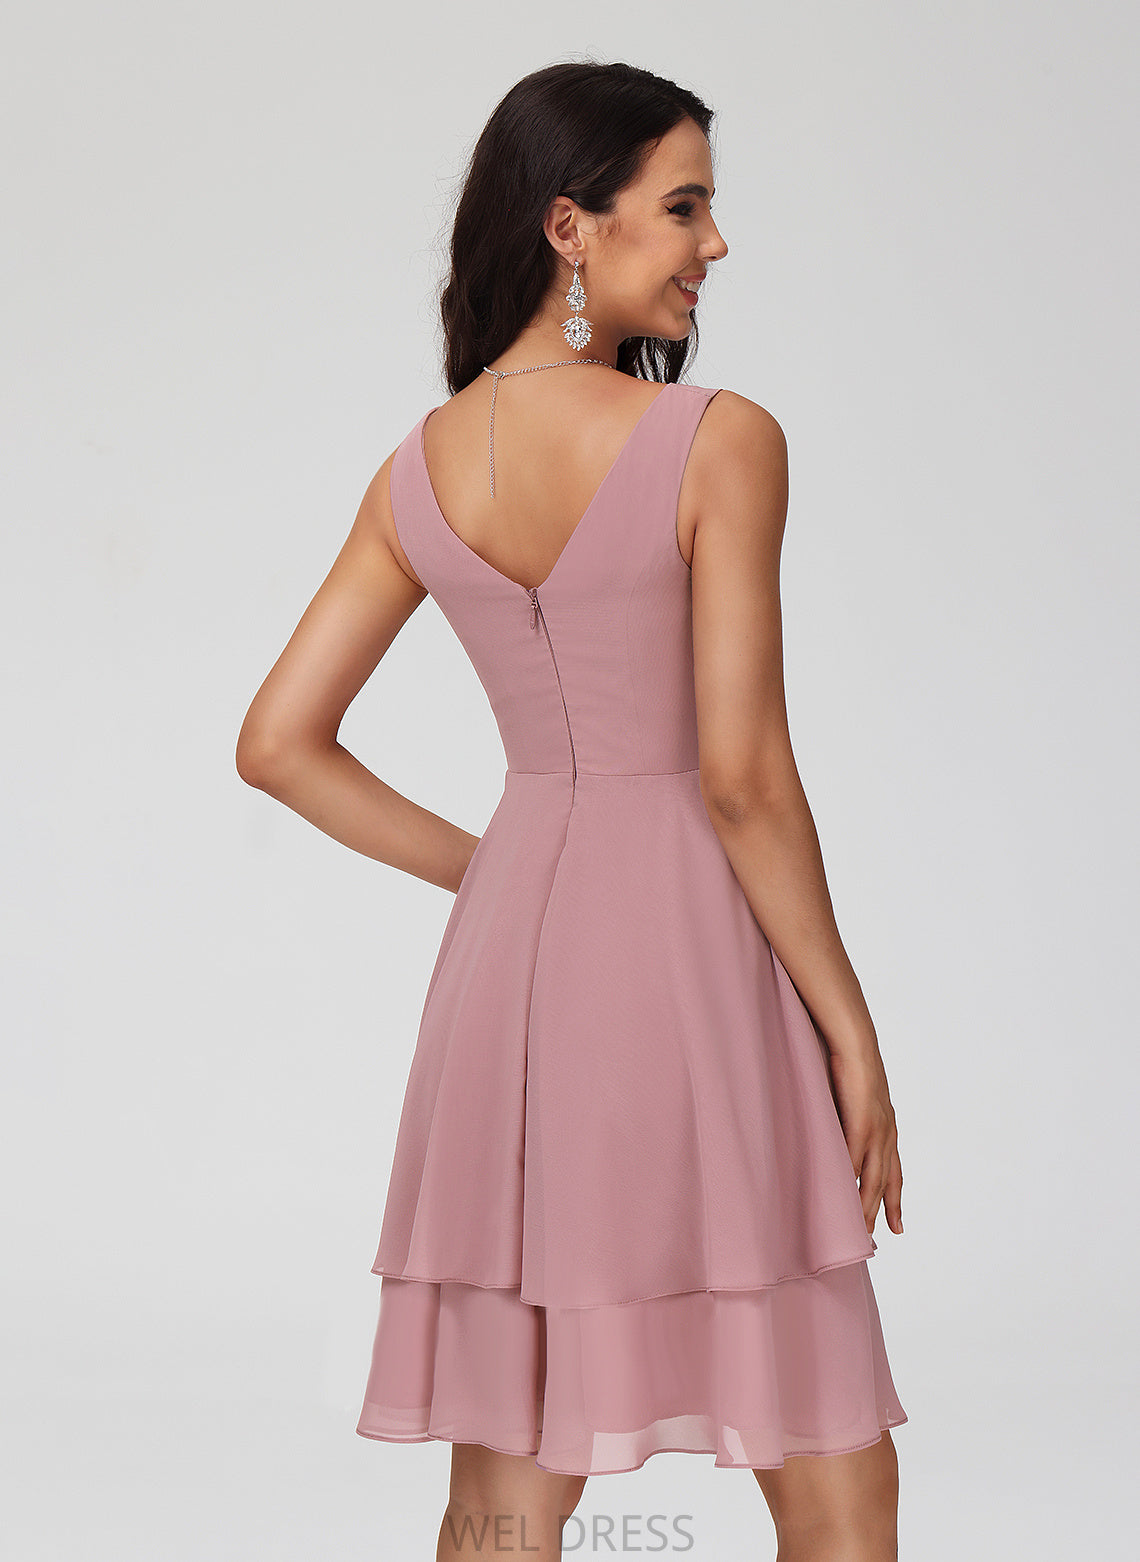 Short/Mini V-neck Kristen Chiffon Homecoming Dresses Ruffle Dress Homecoming With A-Line